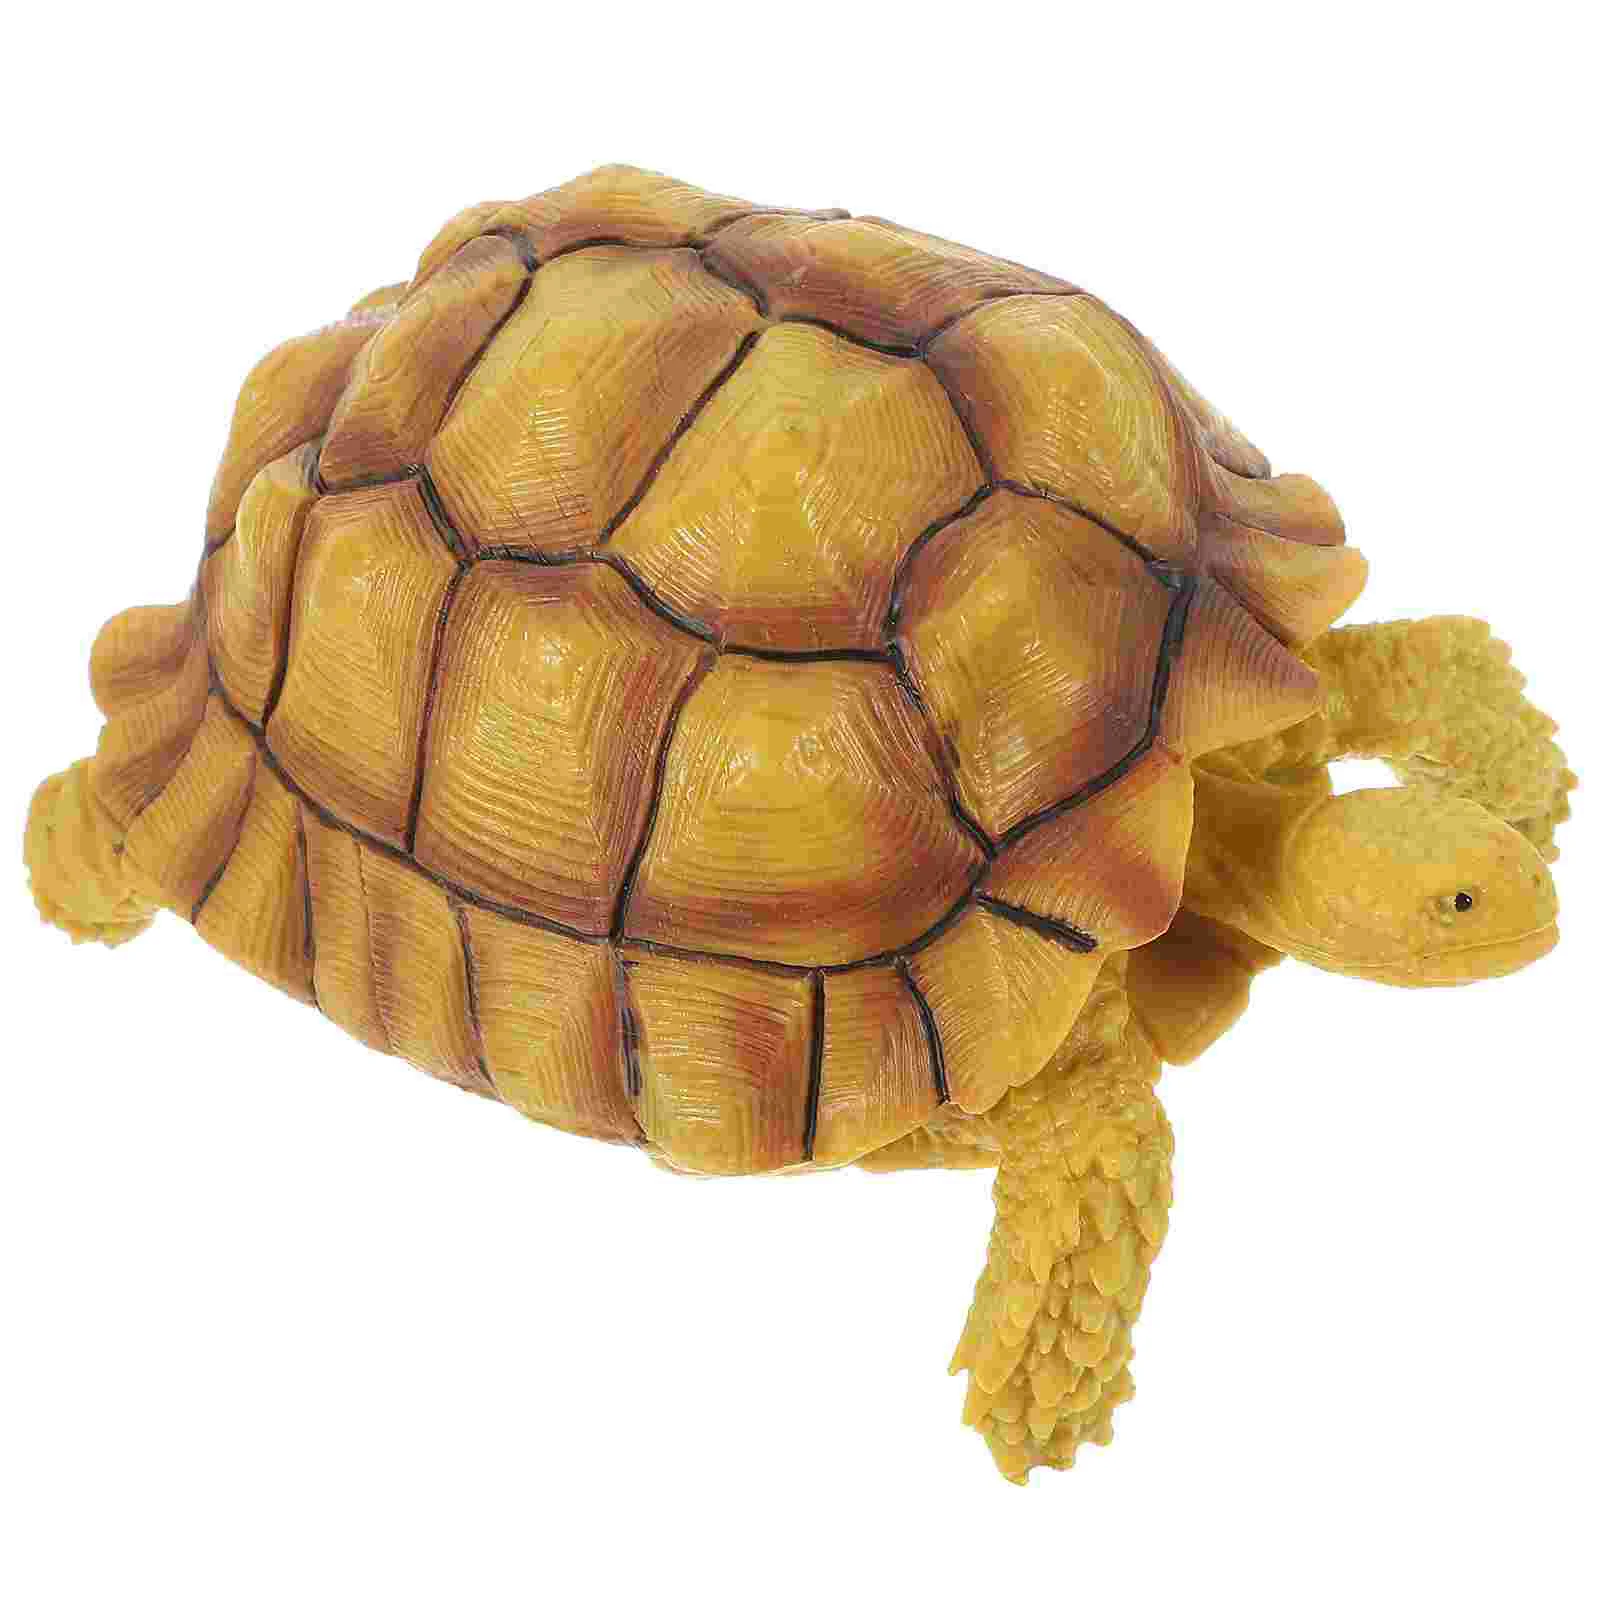 

Simulated Tortoise Toy Lifelike Simulation Turtle Model Figure Animal Childrens Toys